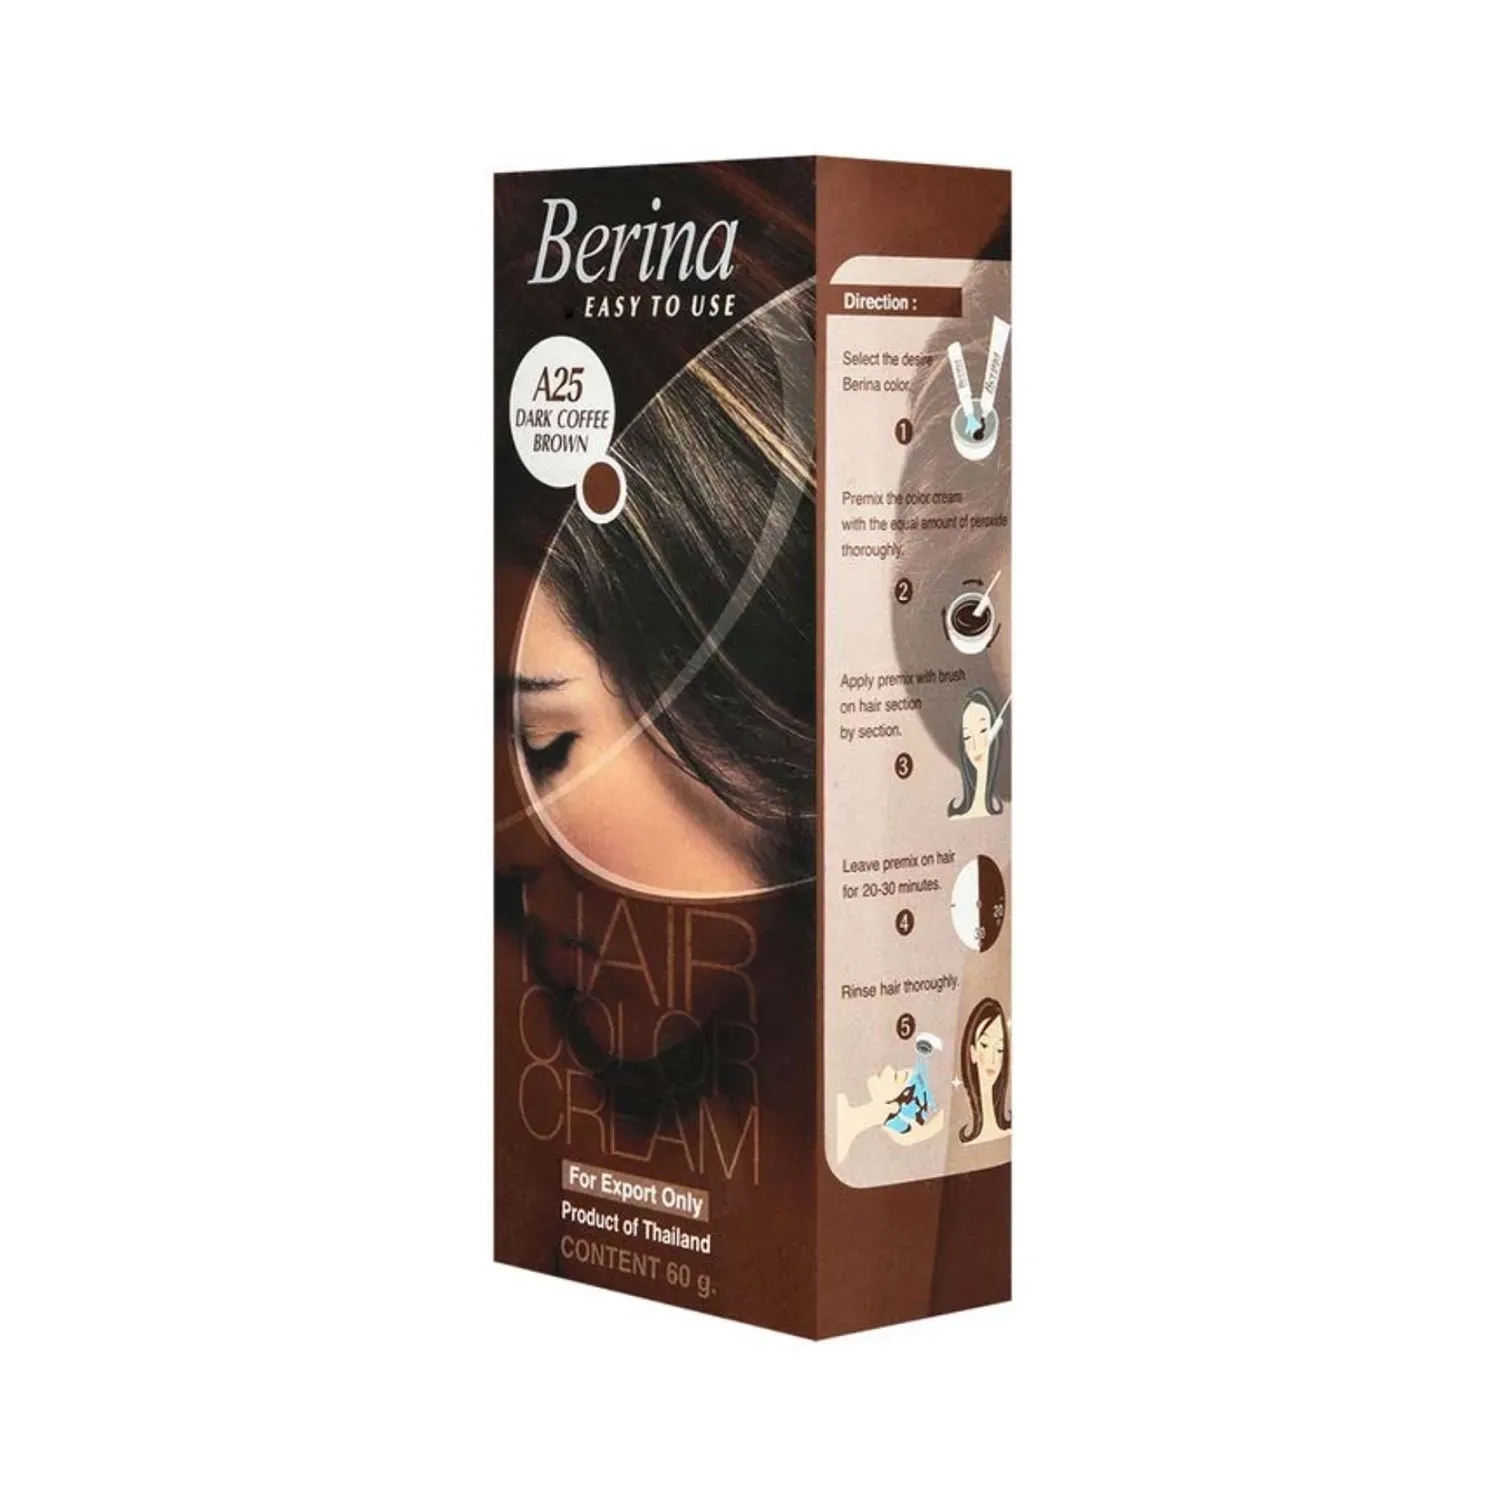 Berina | Berina Cream Hair Color - A25 Dark Coffee Brown (60g)